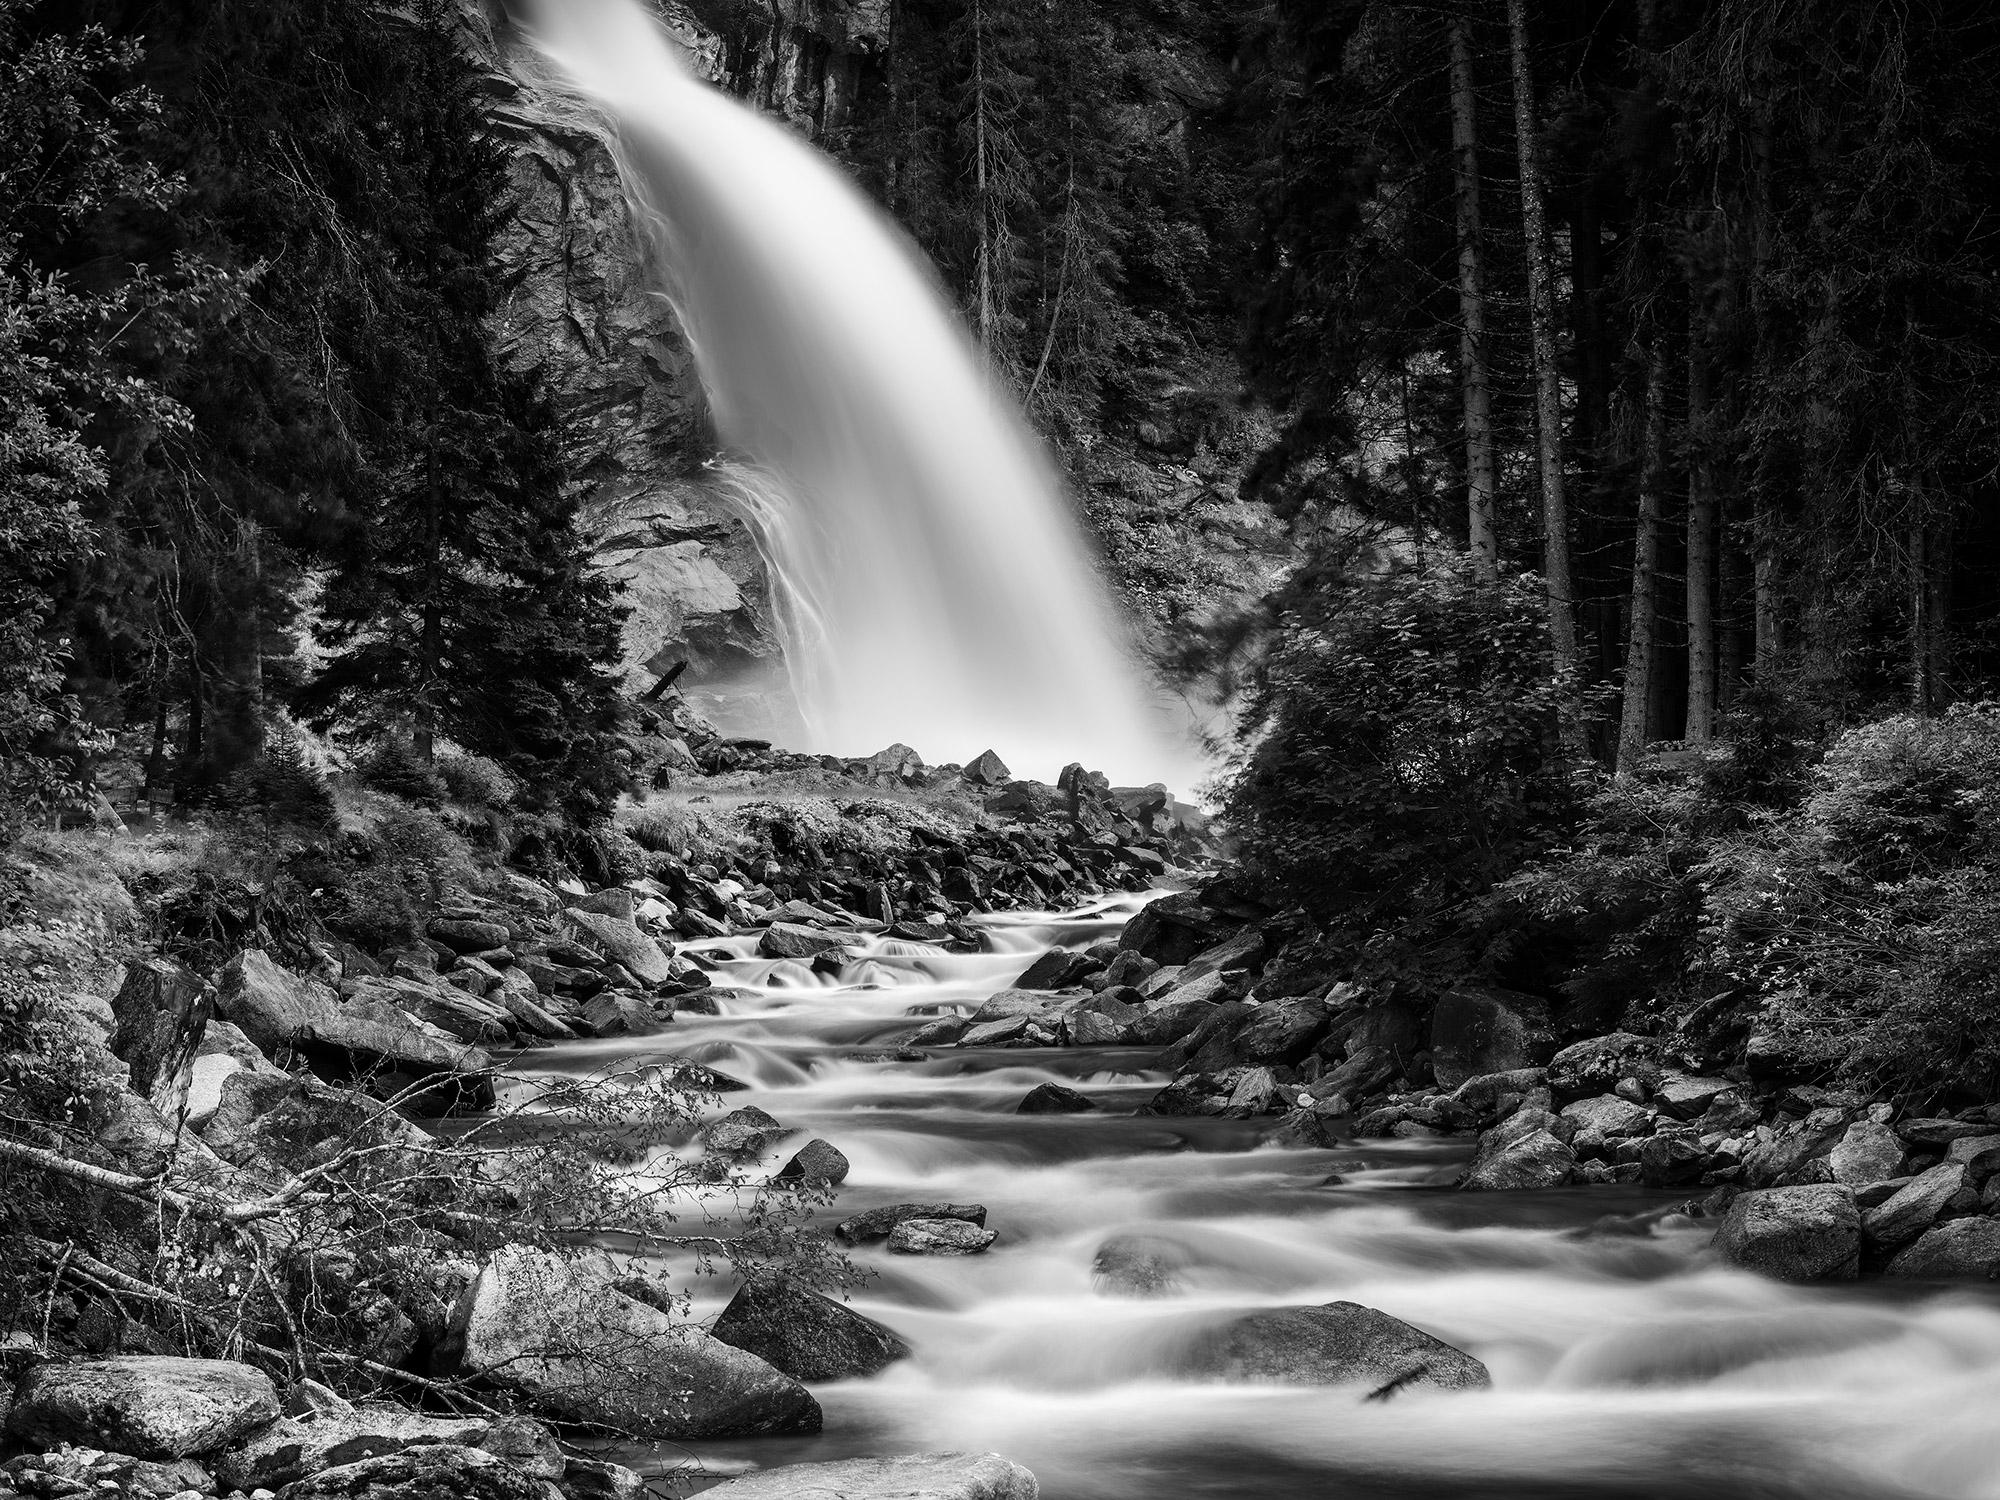 Krimmler Waterfall, mountain stream, black and white art photography, landscape